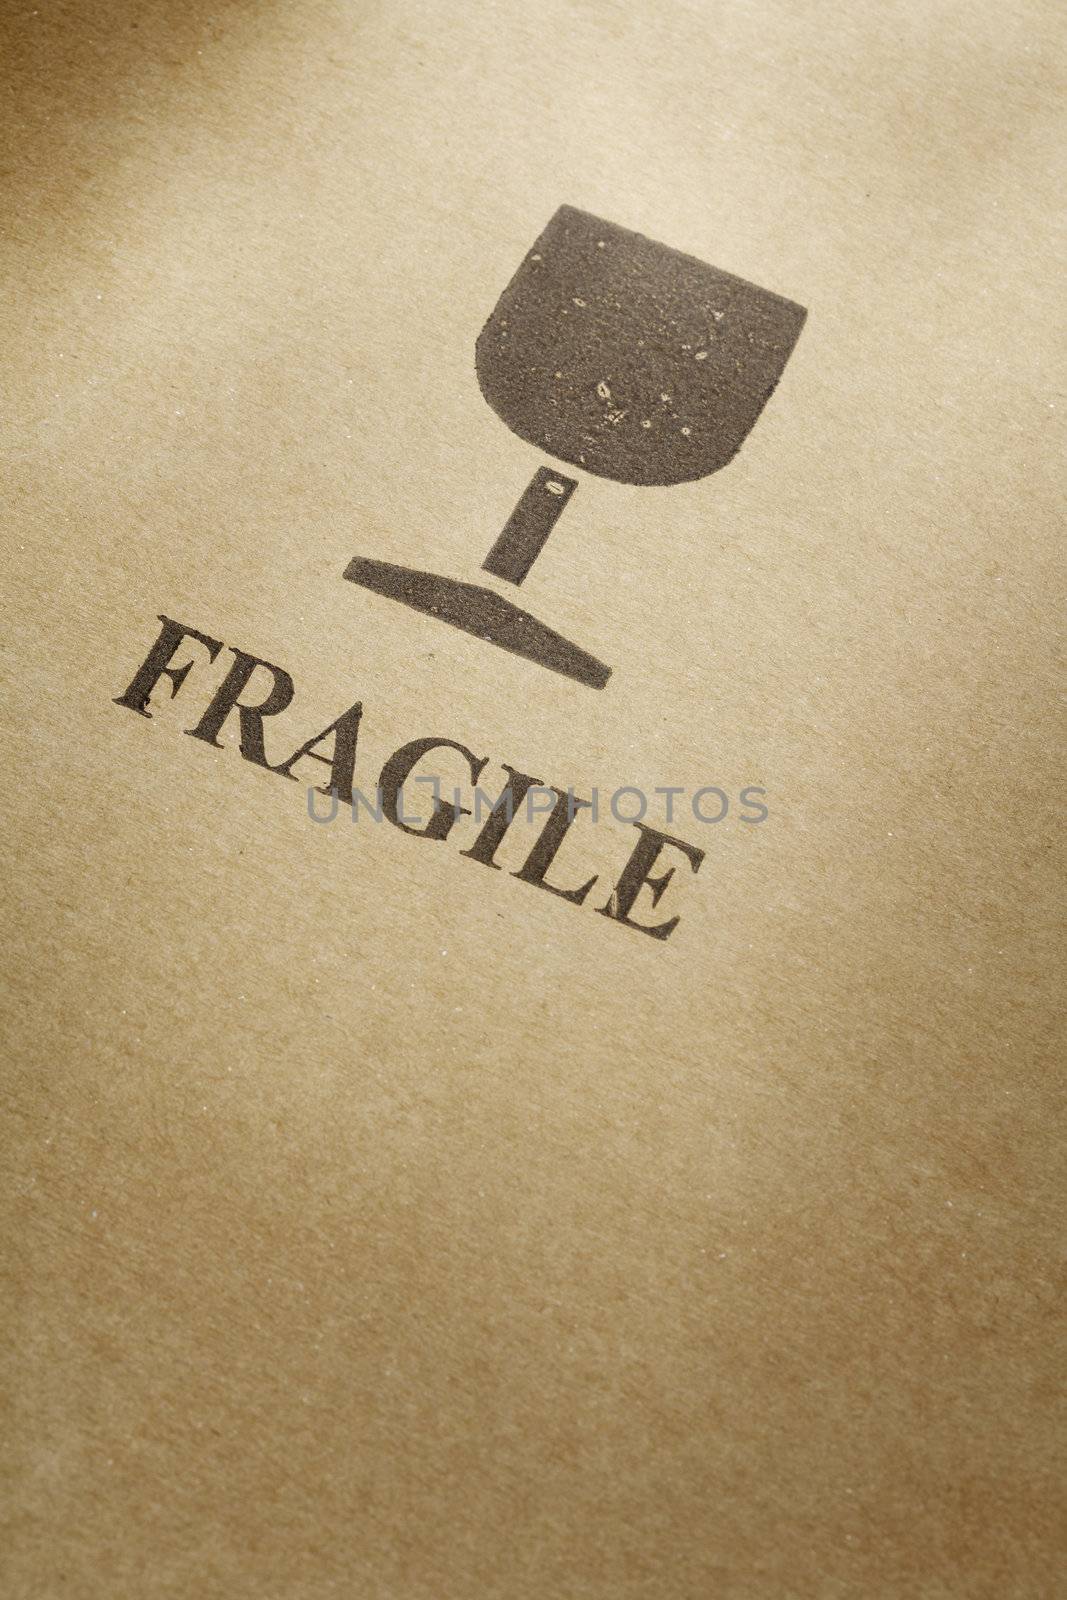 Fragile by Stocksnapper